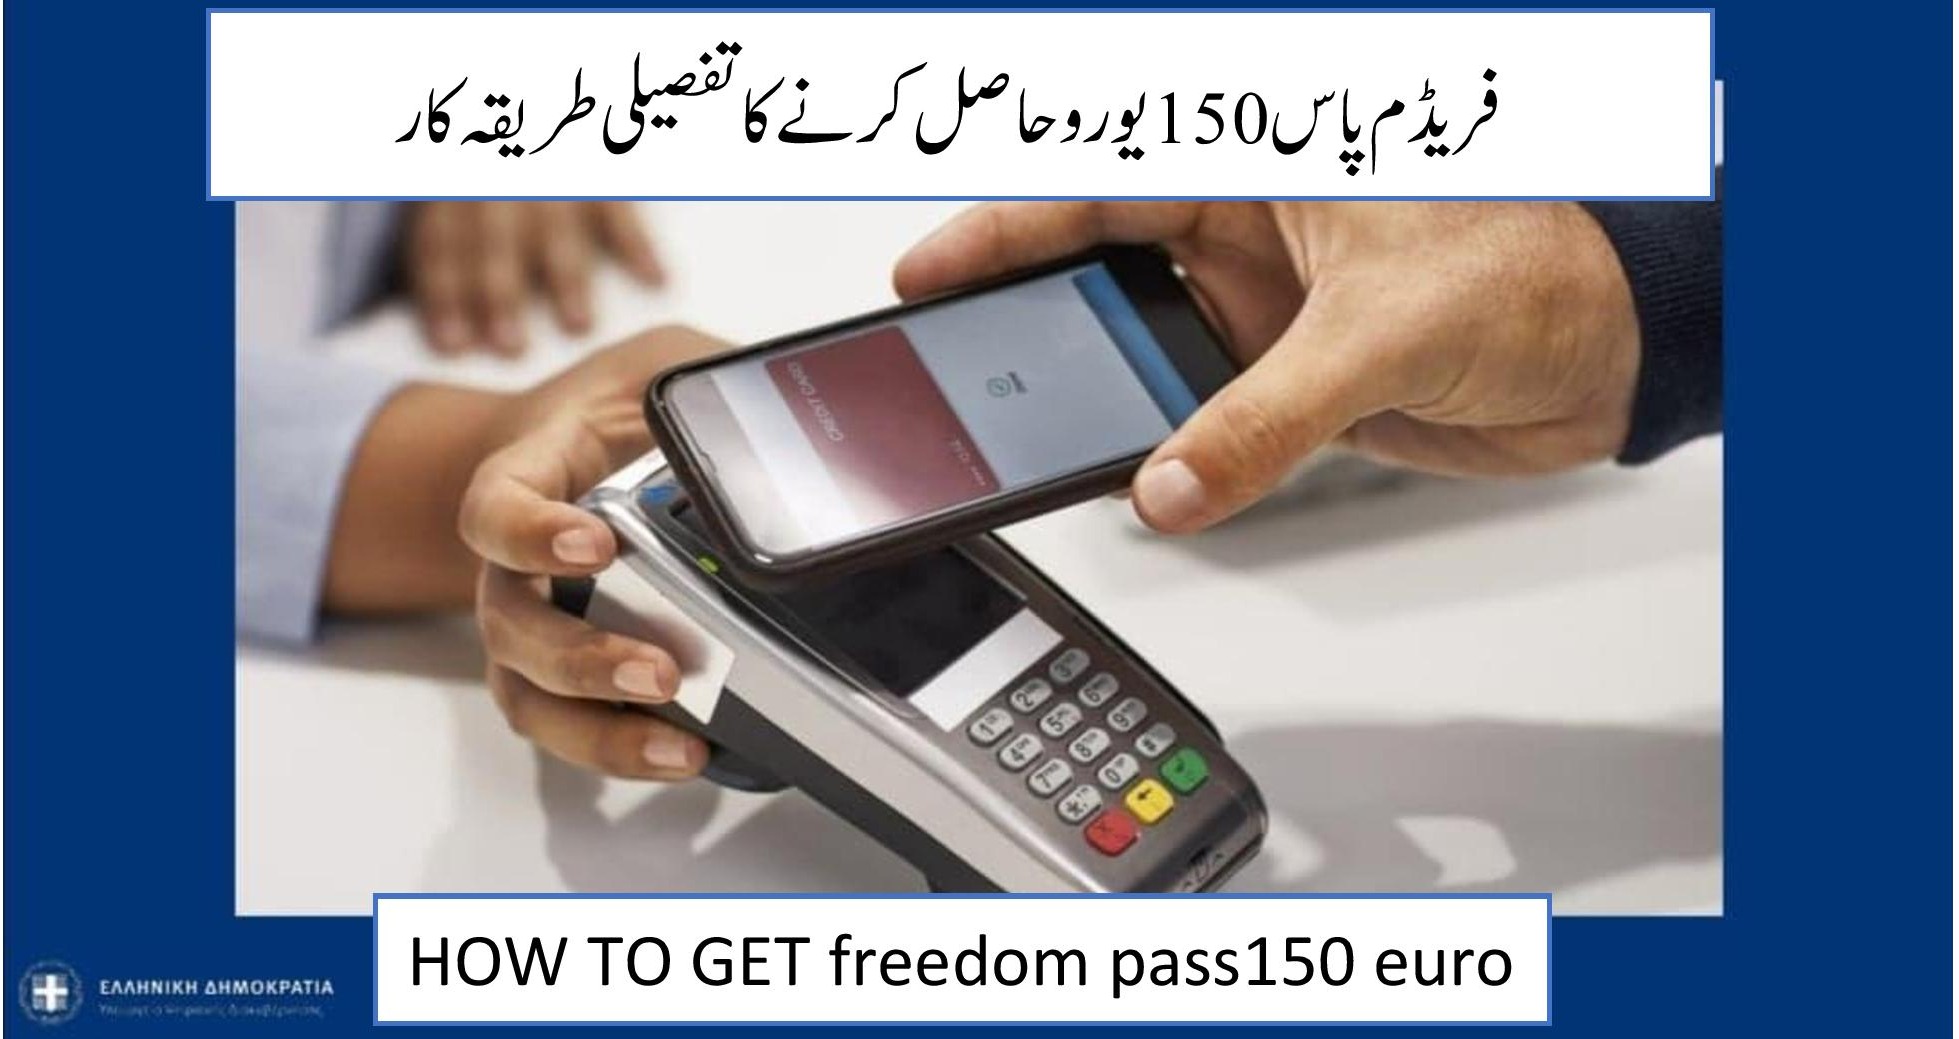 Freedom pass 150 euro Greece